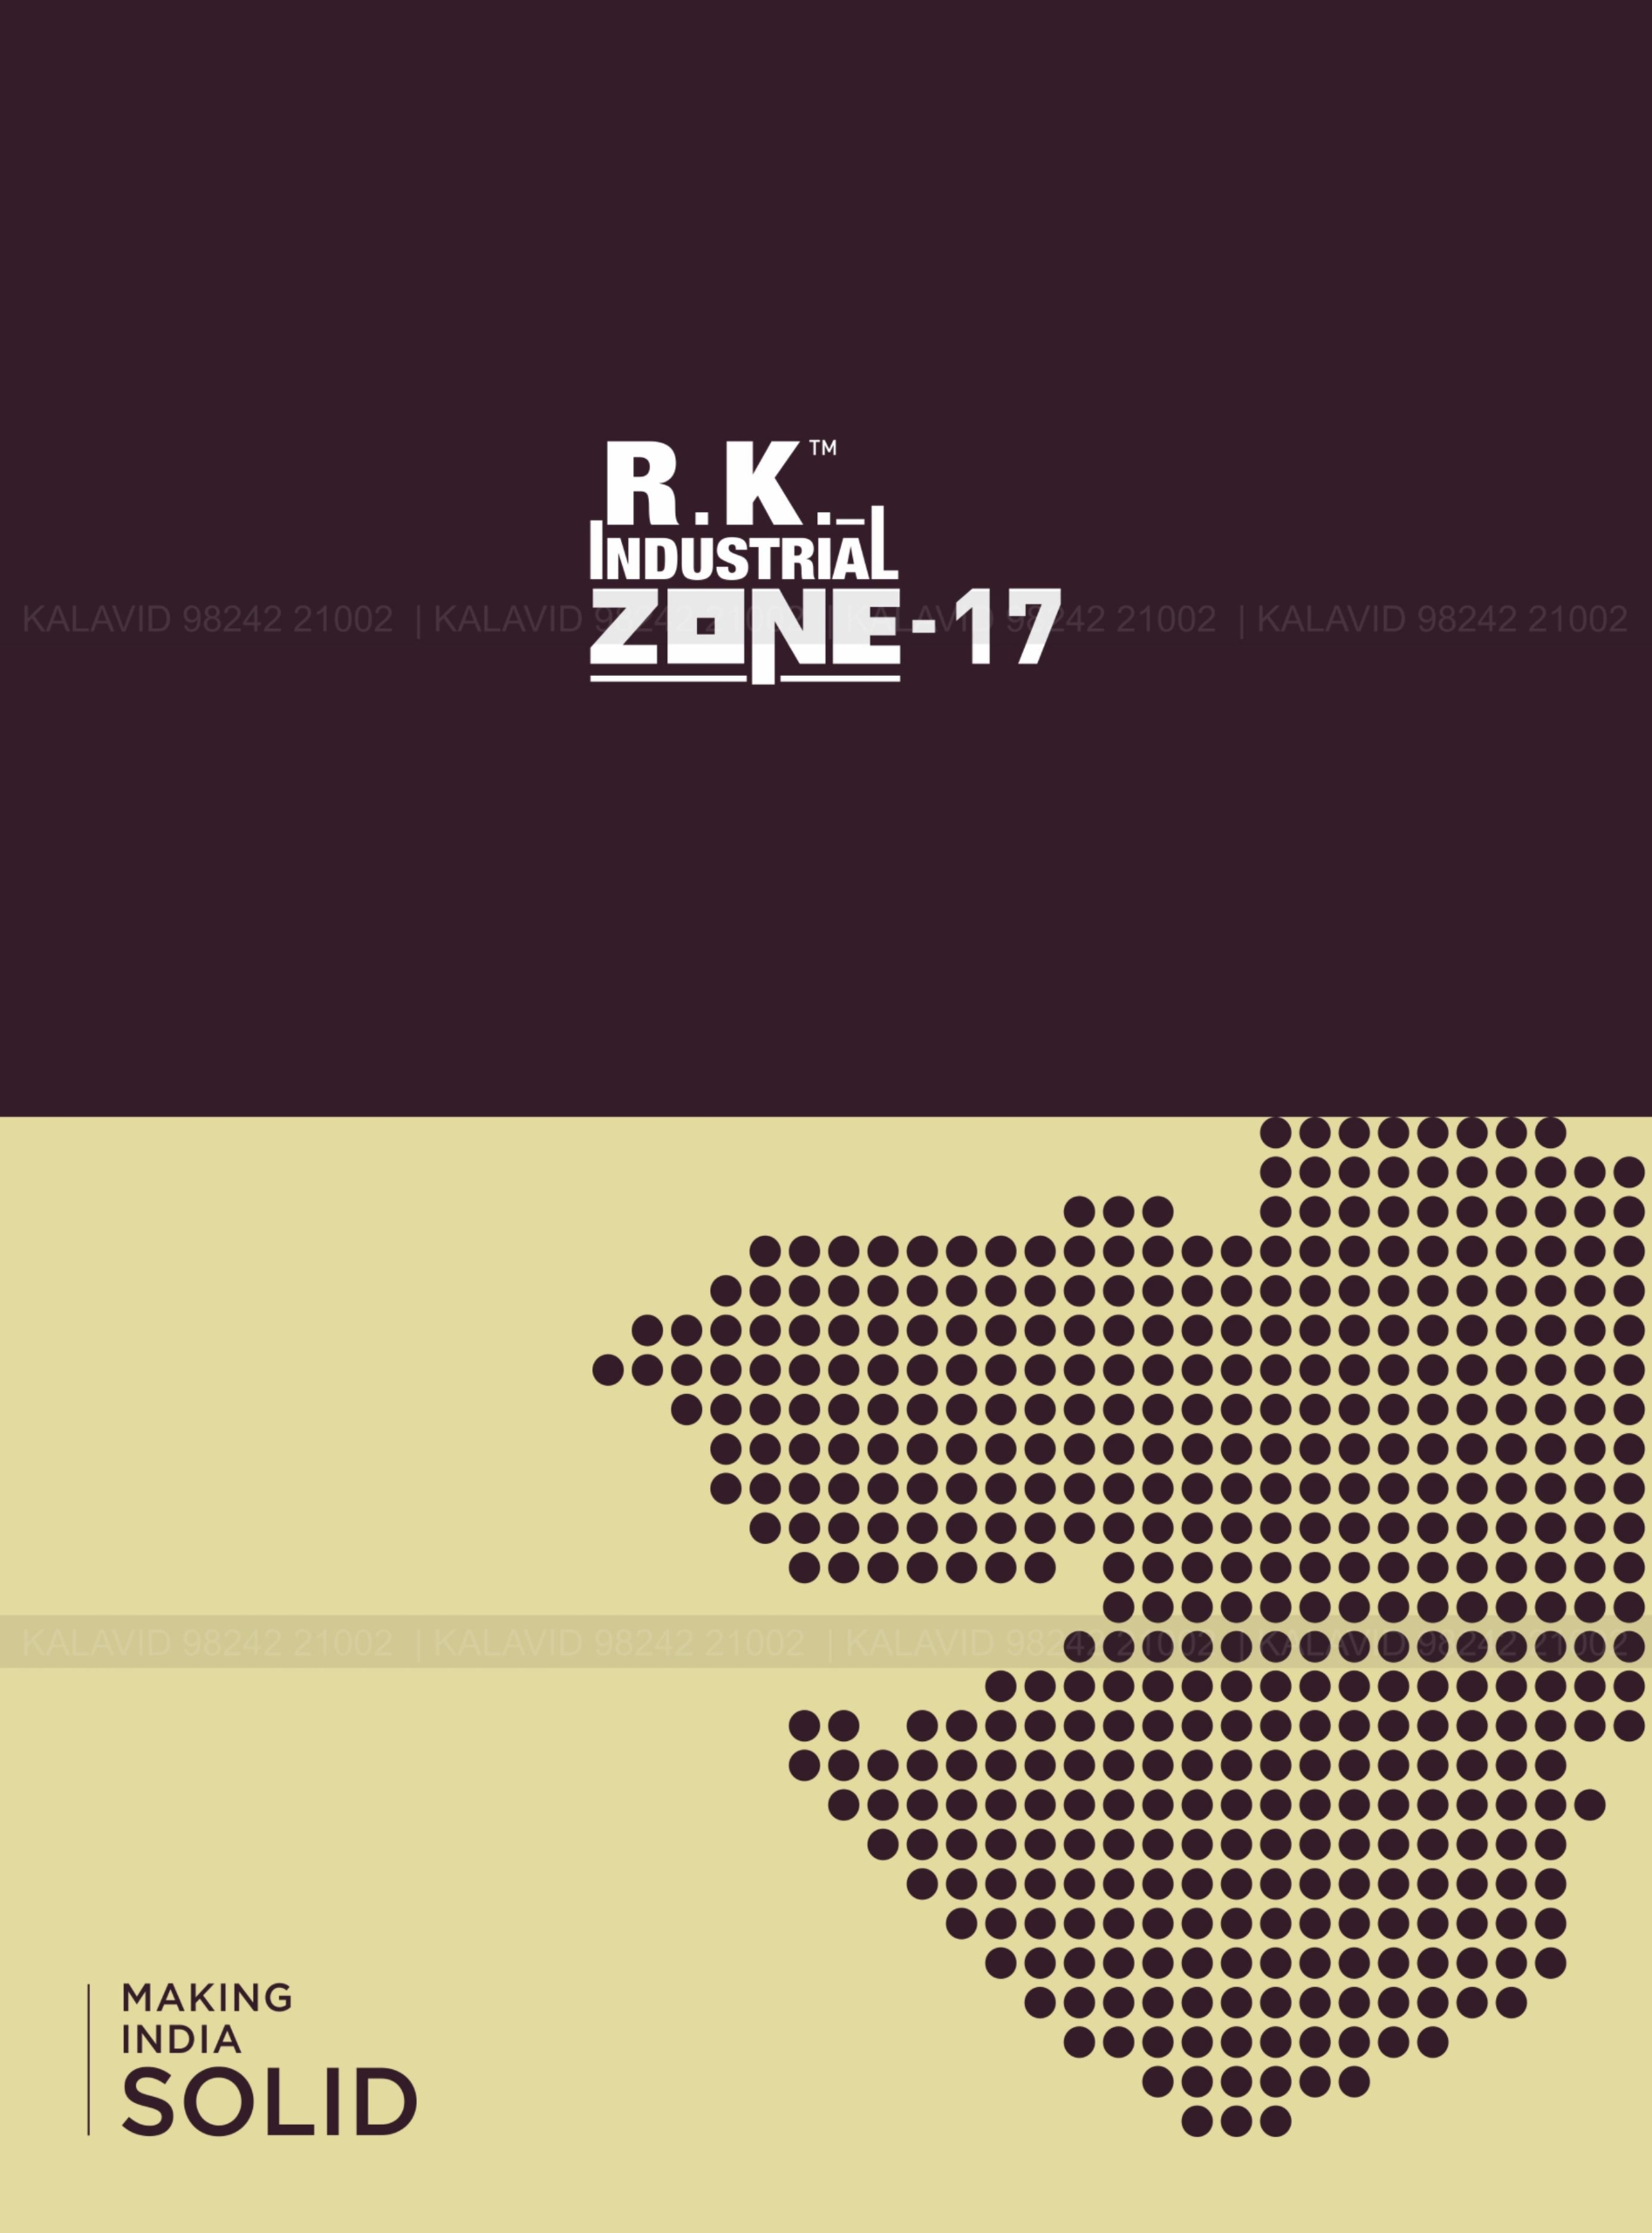 RK ZONE - 17